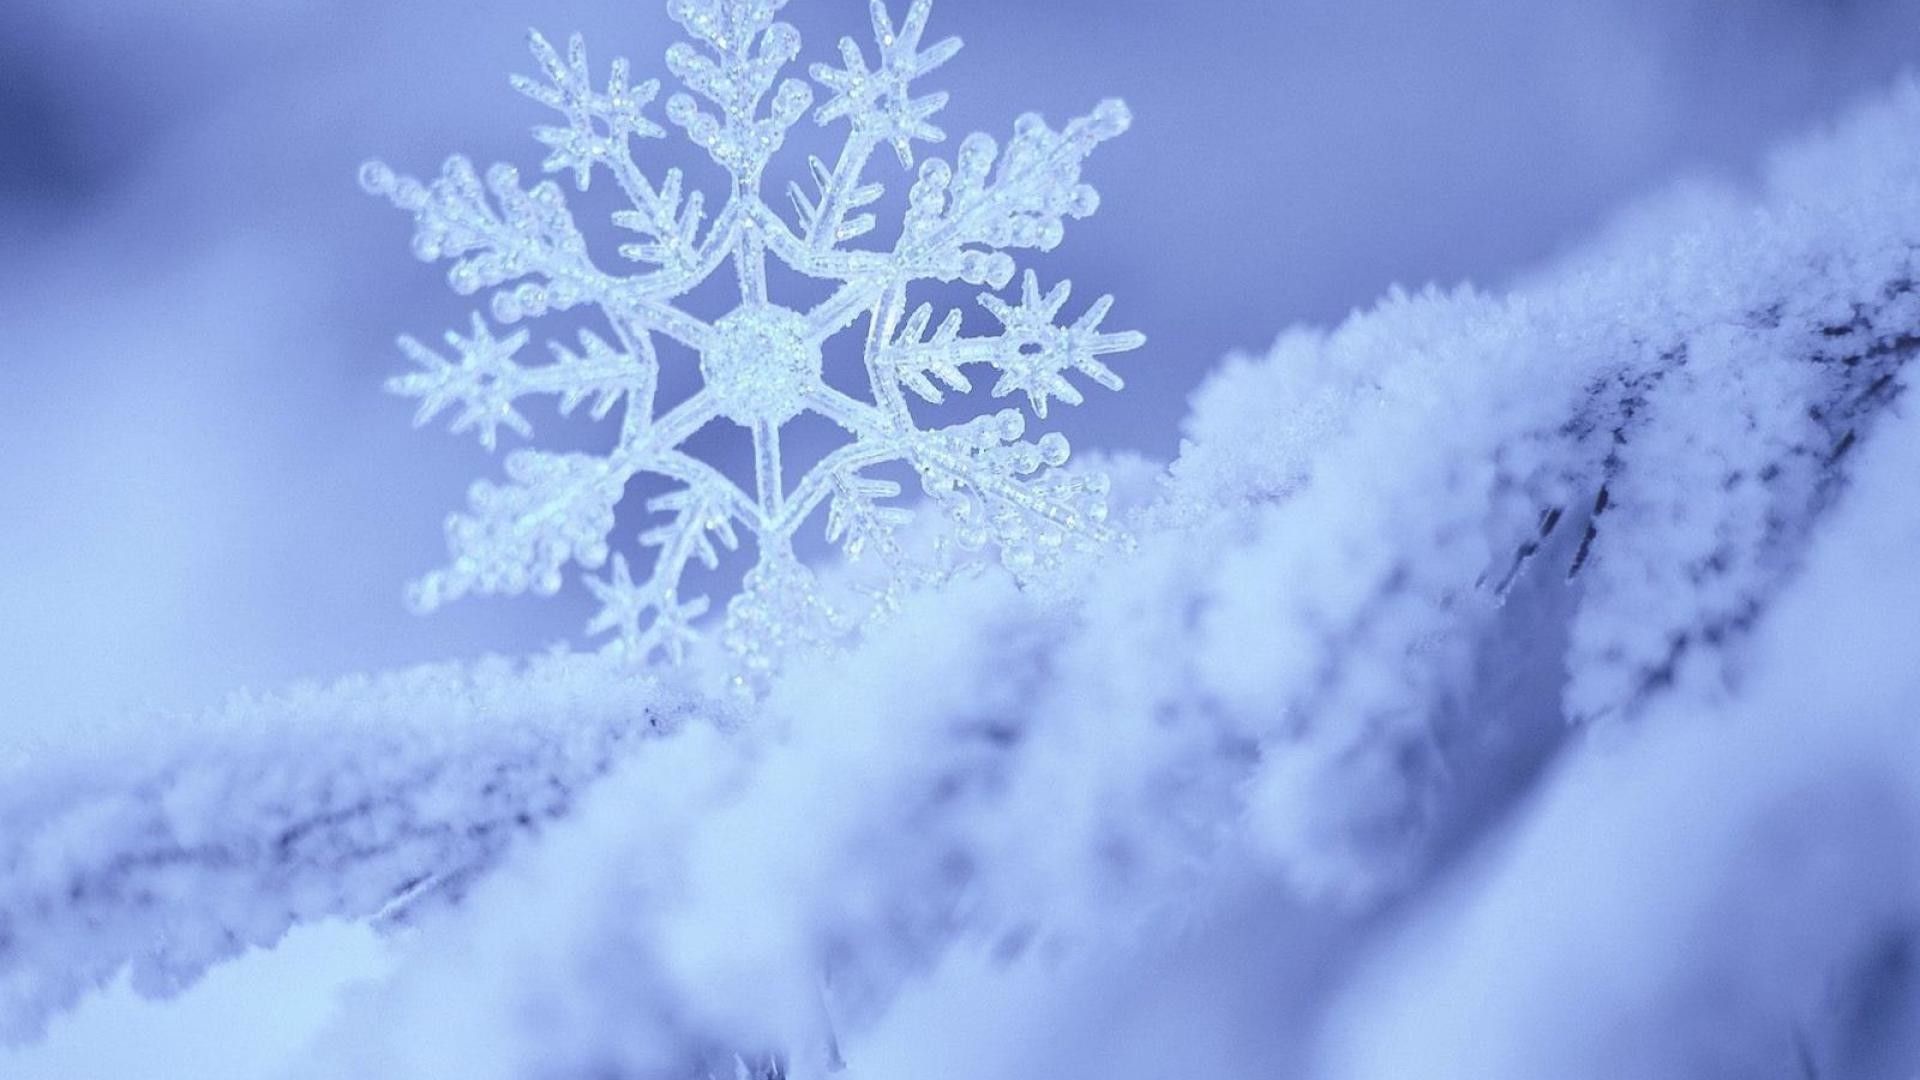 Perfect macro snowflake in the snow winter wallpaper. Beautiful Macro Wallpaper. HD Wallpaper. Snowflake wallpaper, Winter wallpaper, Snowflake photography